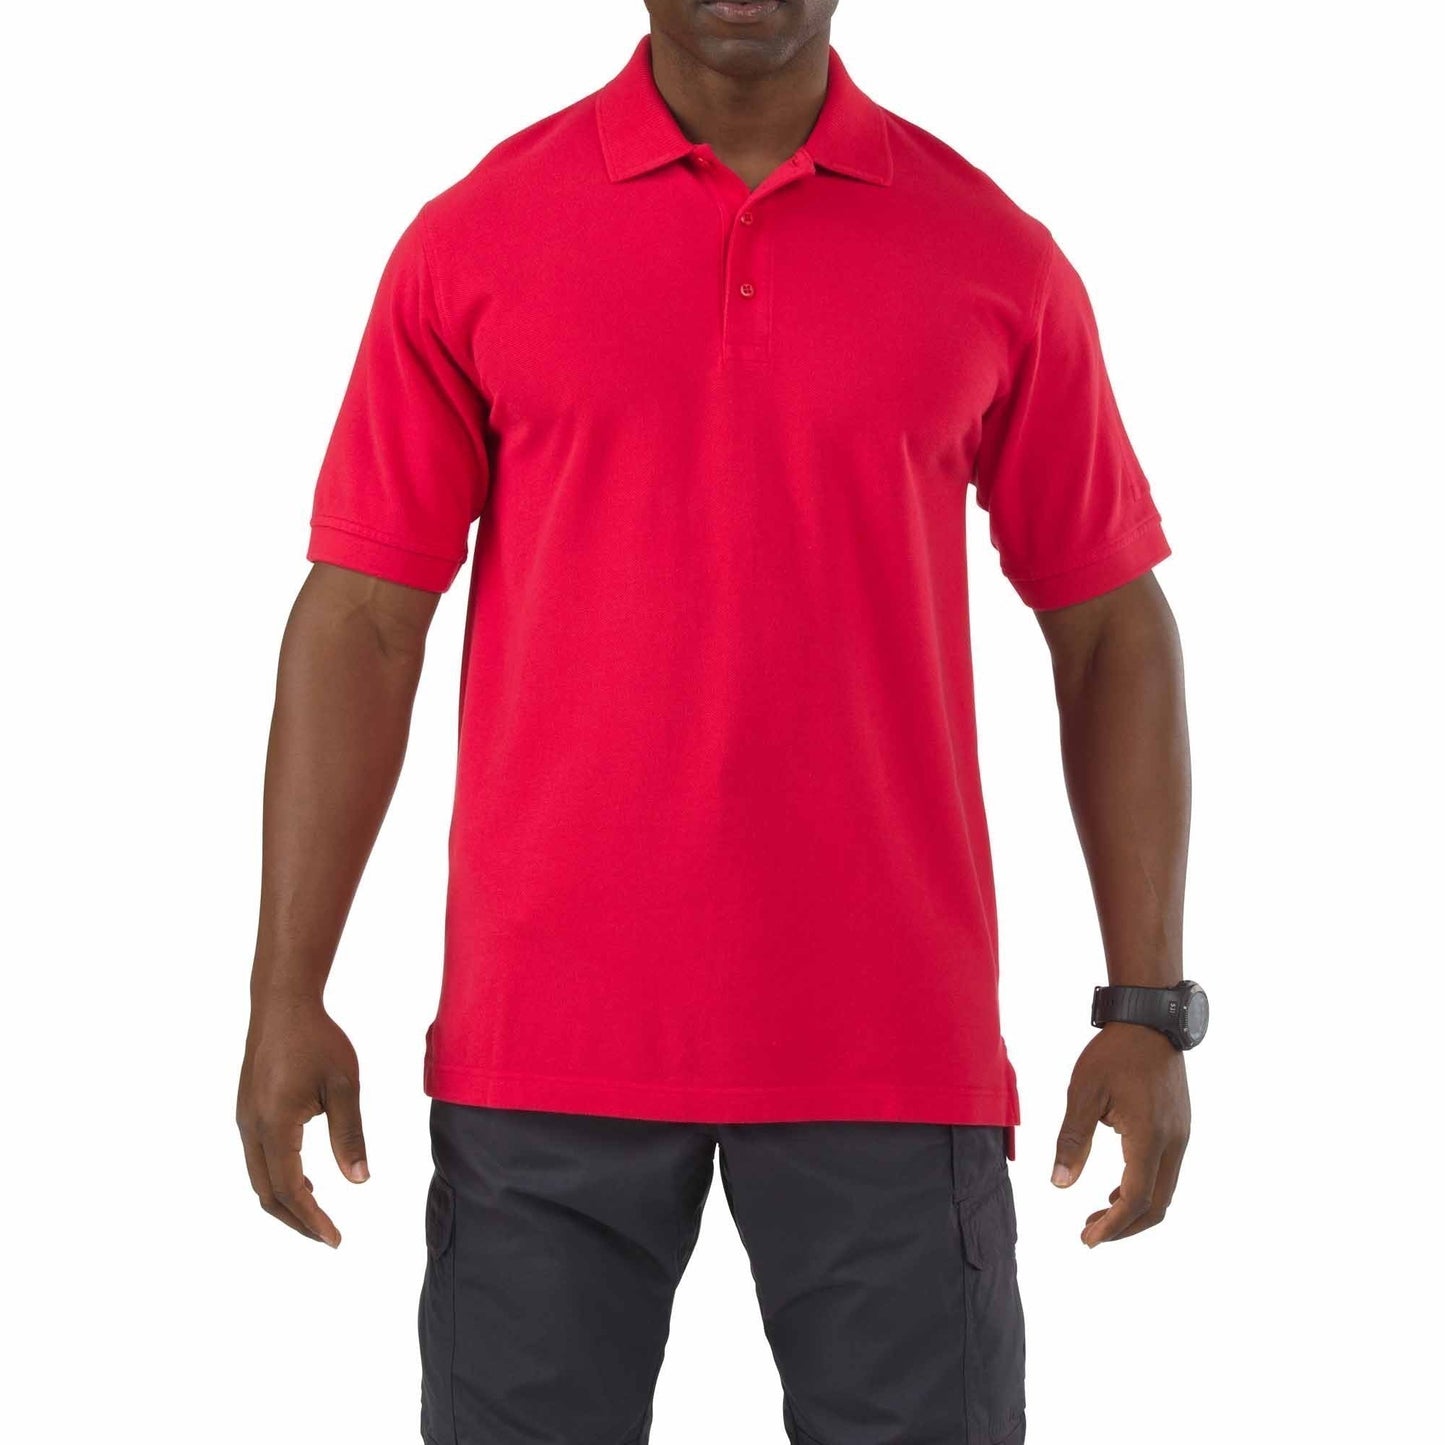 5.11 Tactical Professional Short Sleeve Polo Shirt Range Red Tactical Distributors Ltd New Zealand